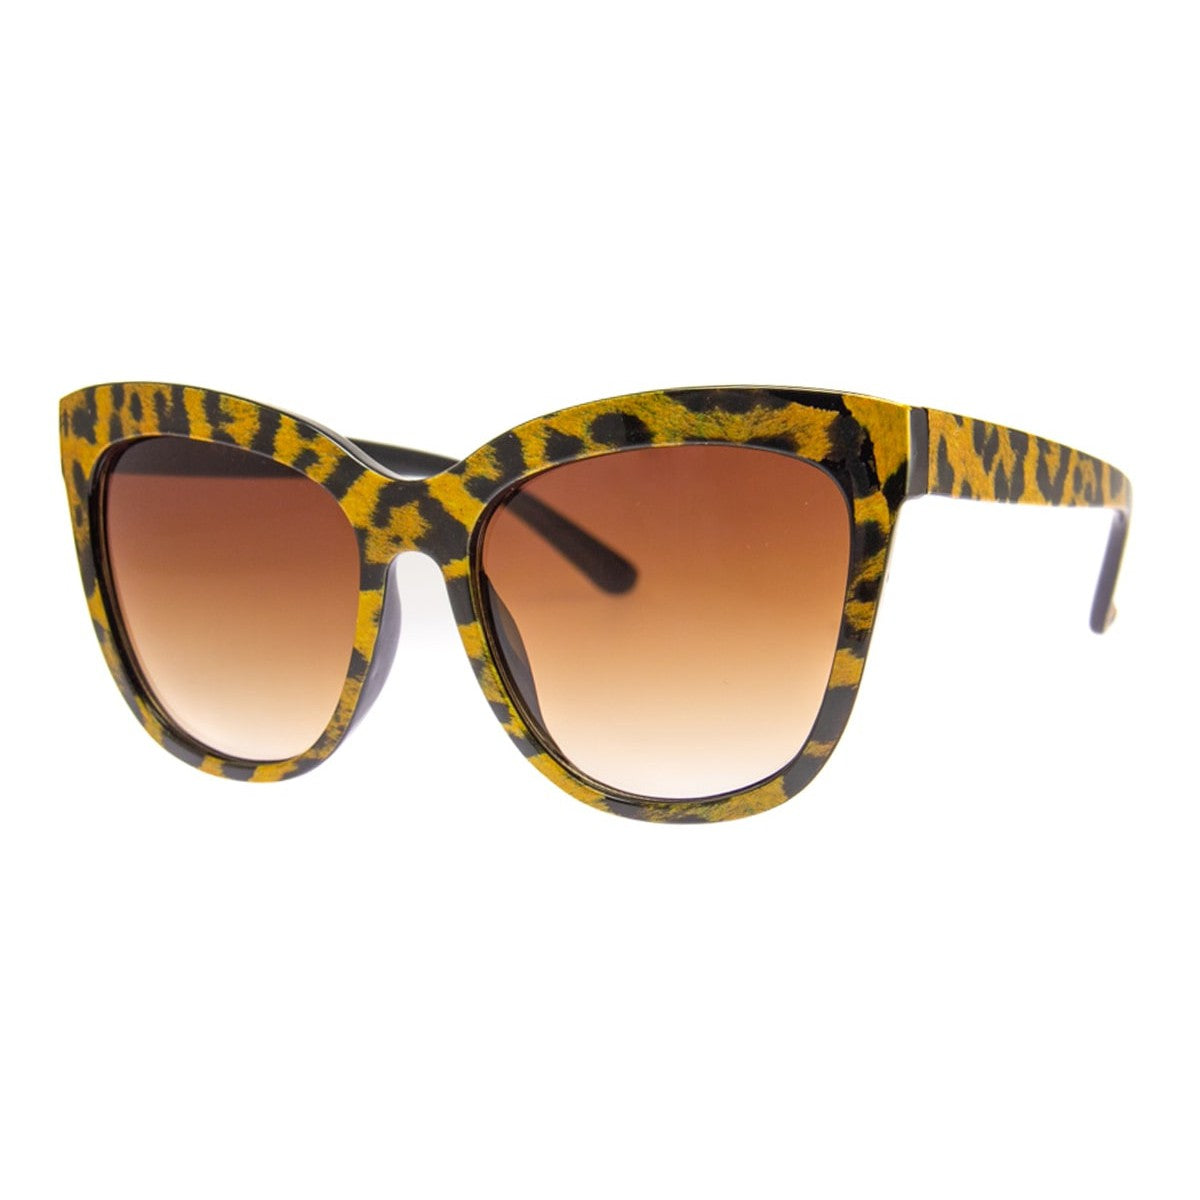 Gorgeous Sunglasses - Cheetah